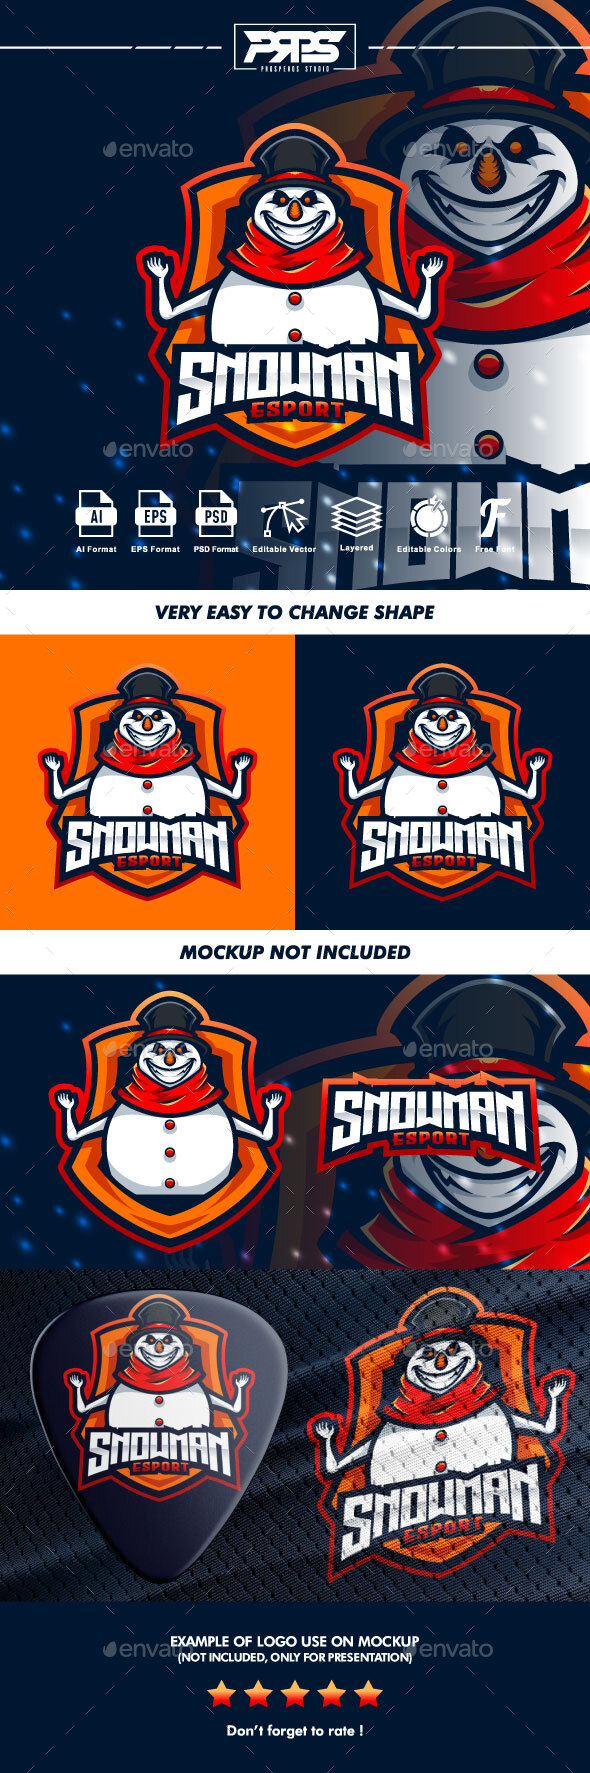 [DOWNLOAD]Snowman Esport Logo